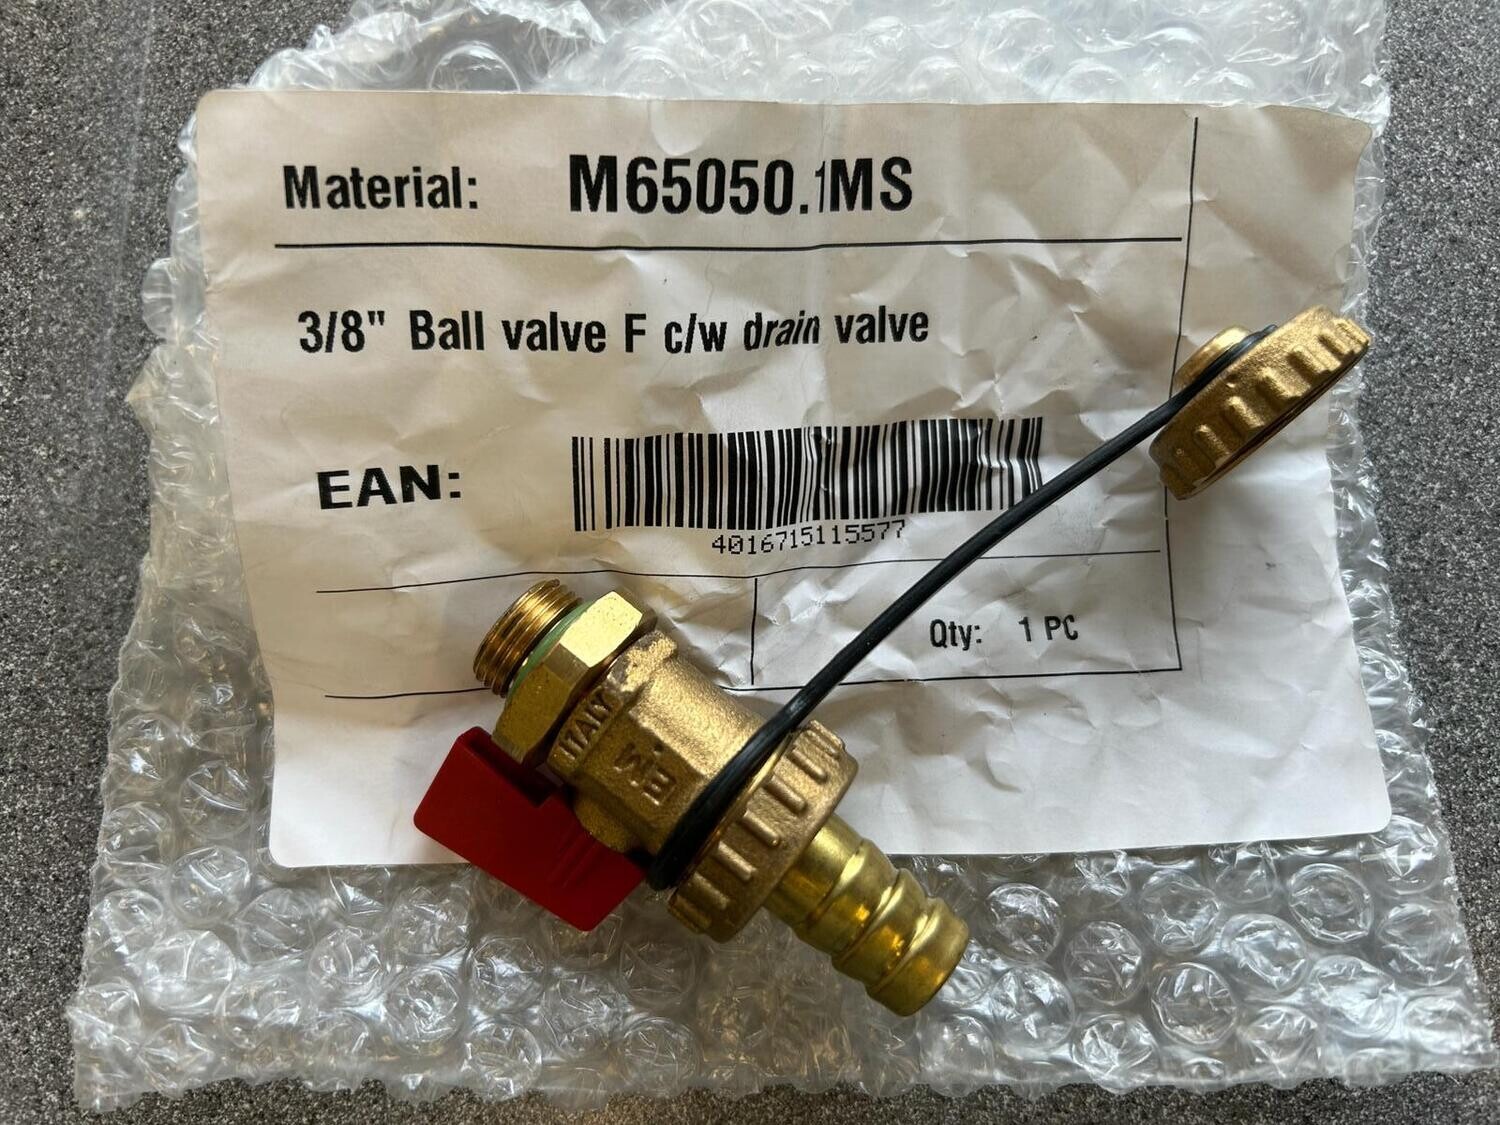 M65050.1MS - 3/8" Ball valve F c/w drain valve - Flamco